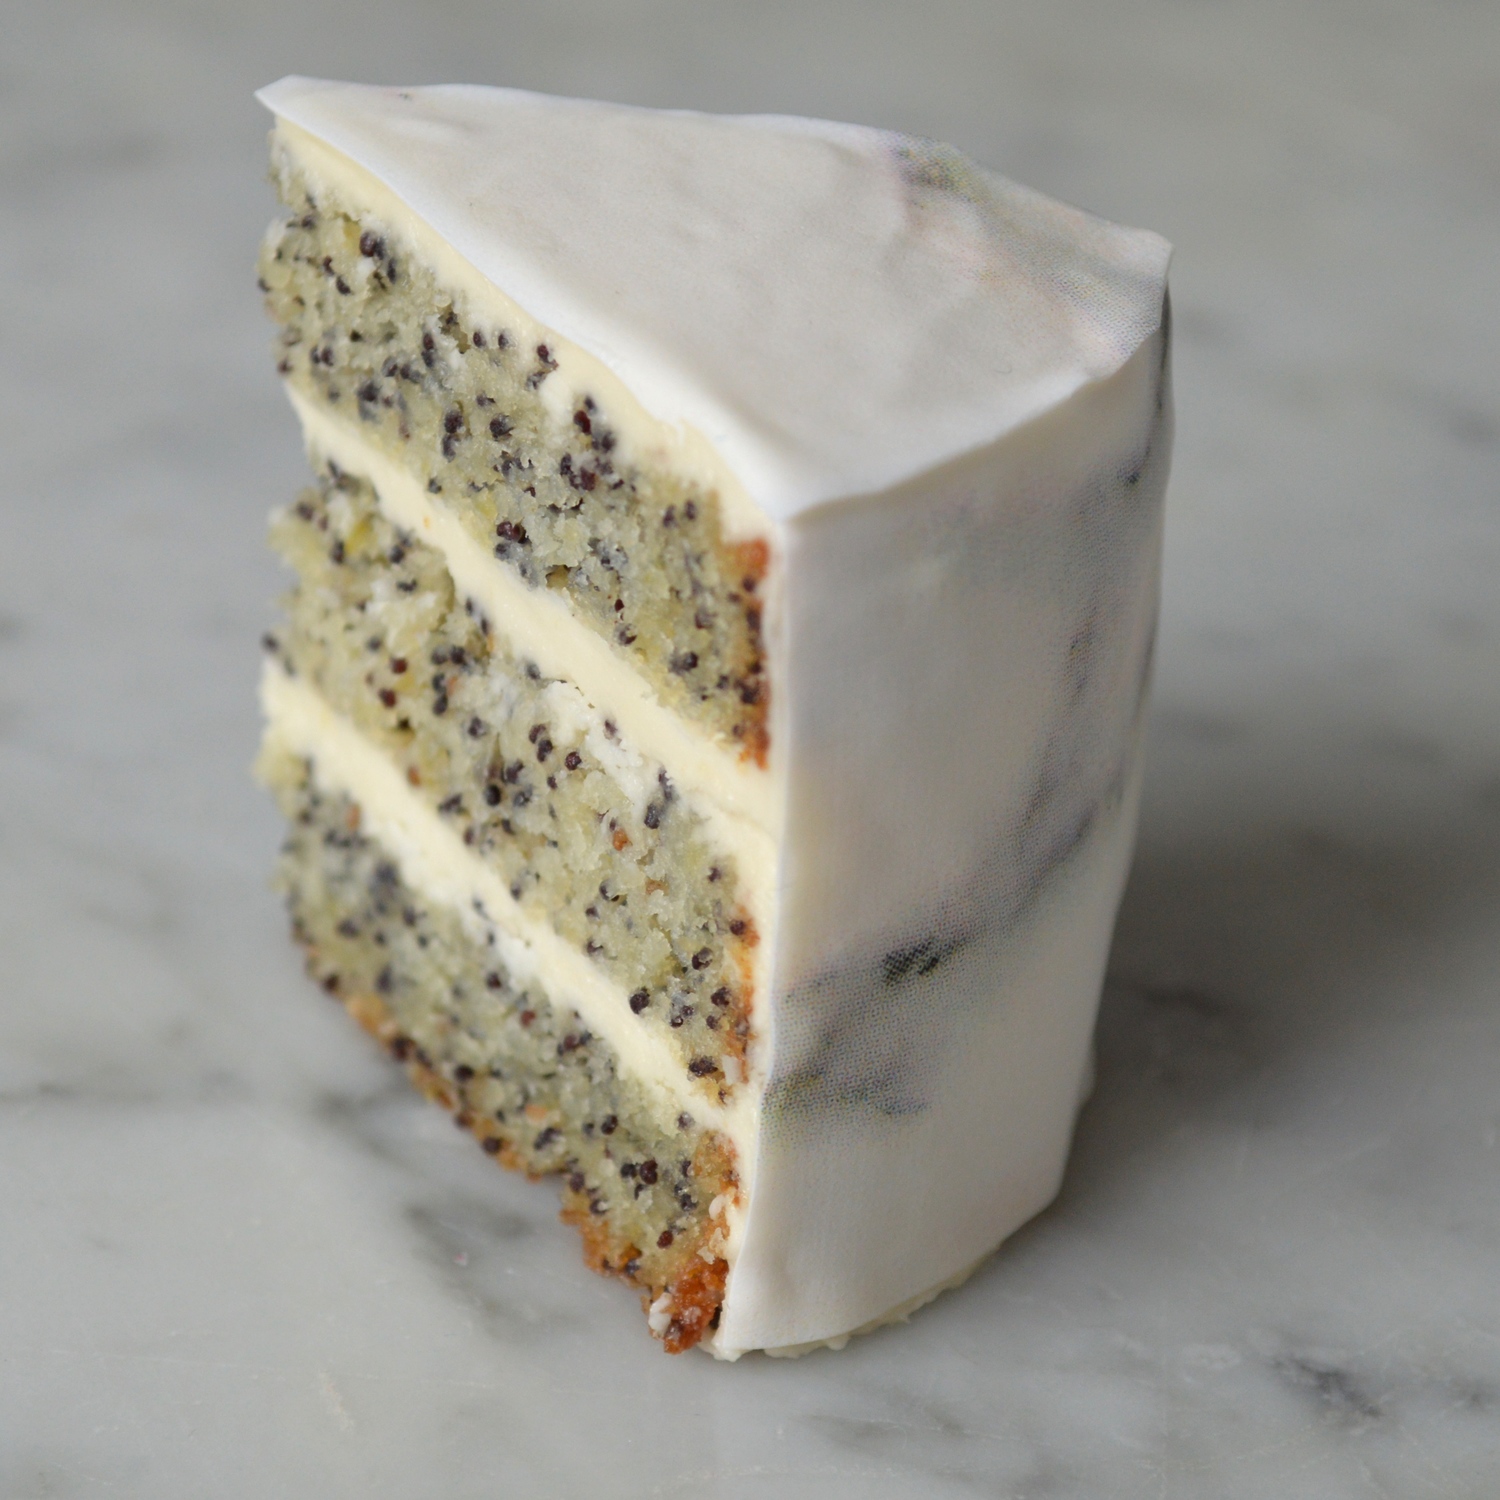 Lemony Poppyseed Cake with  Carrara Chefanie Sheets